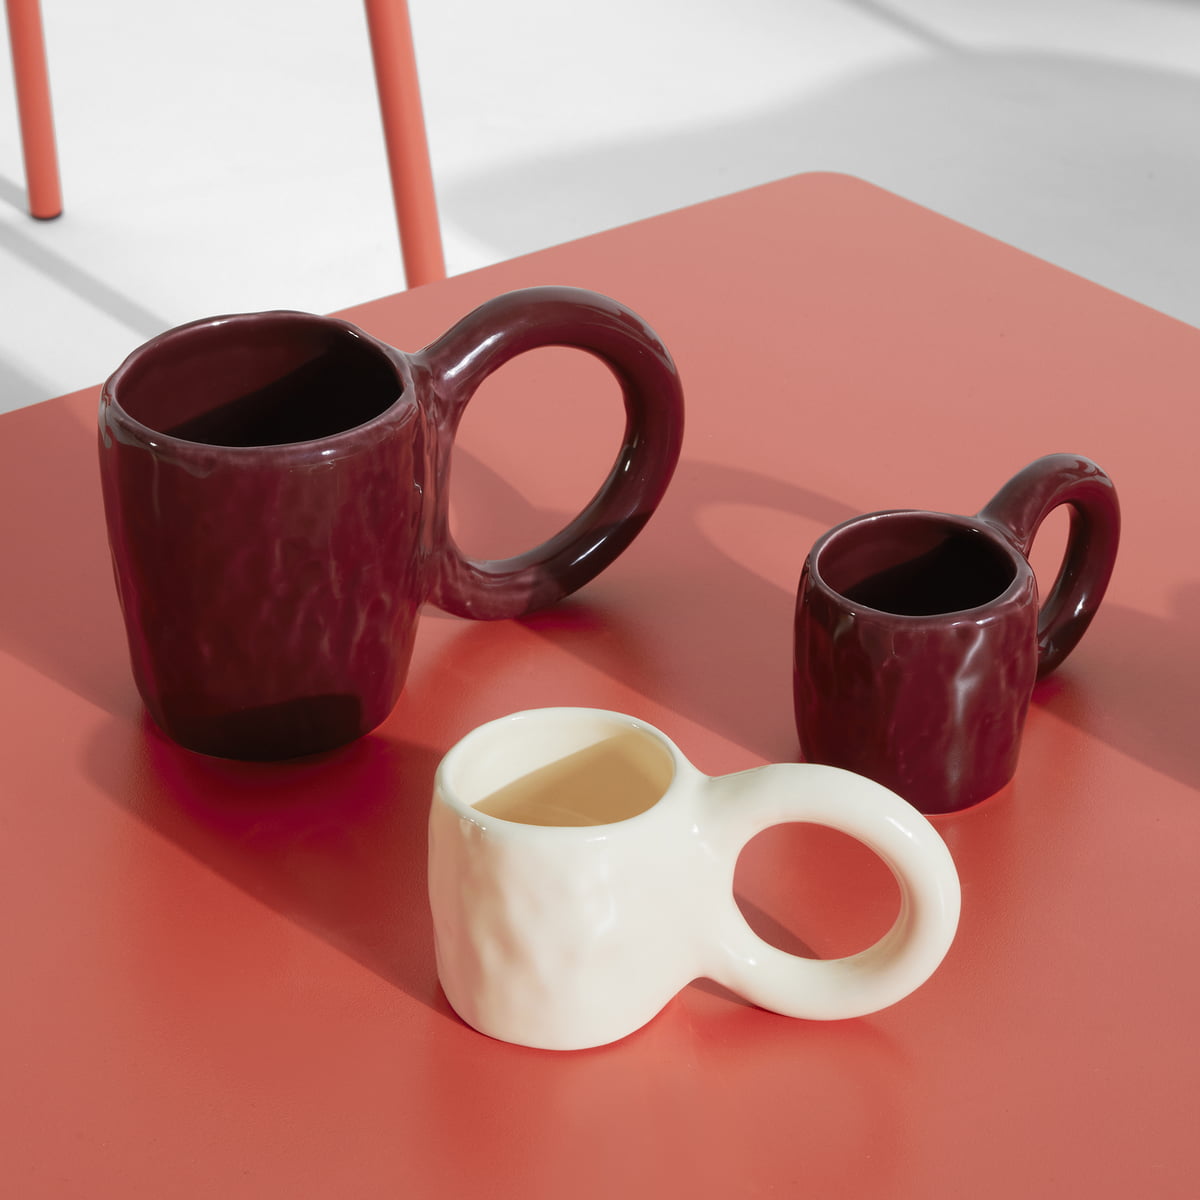 Set 4 Espresso Cup & Saucer Lemon, Cups and mugs